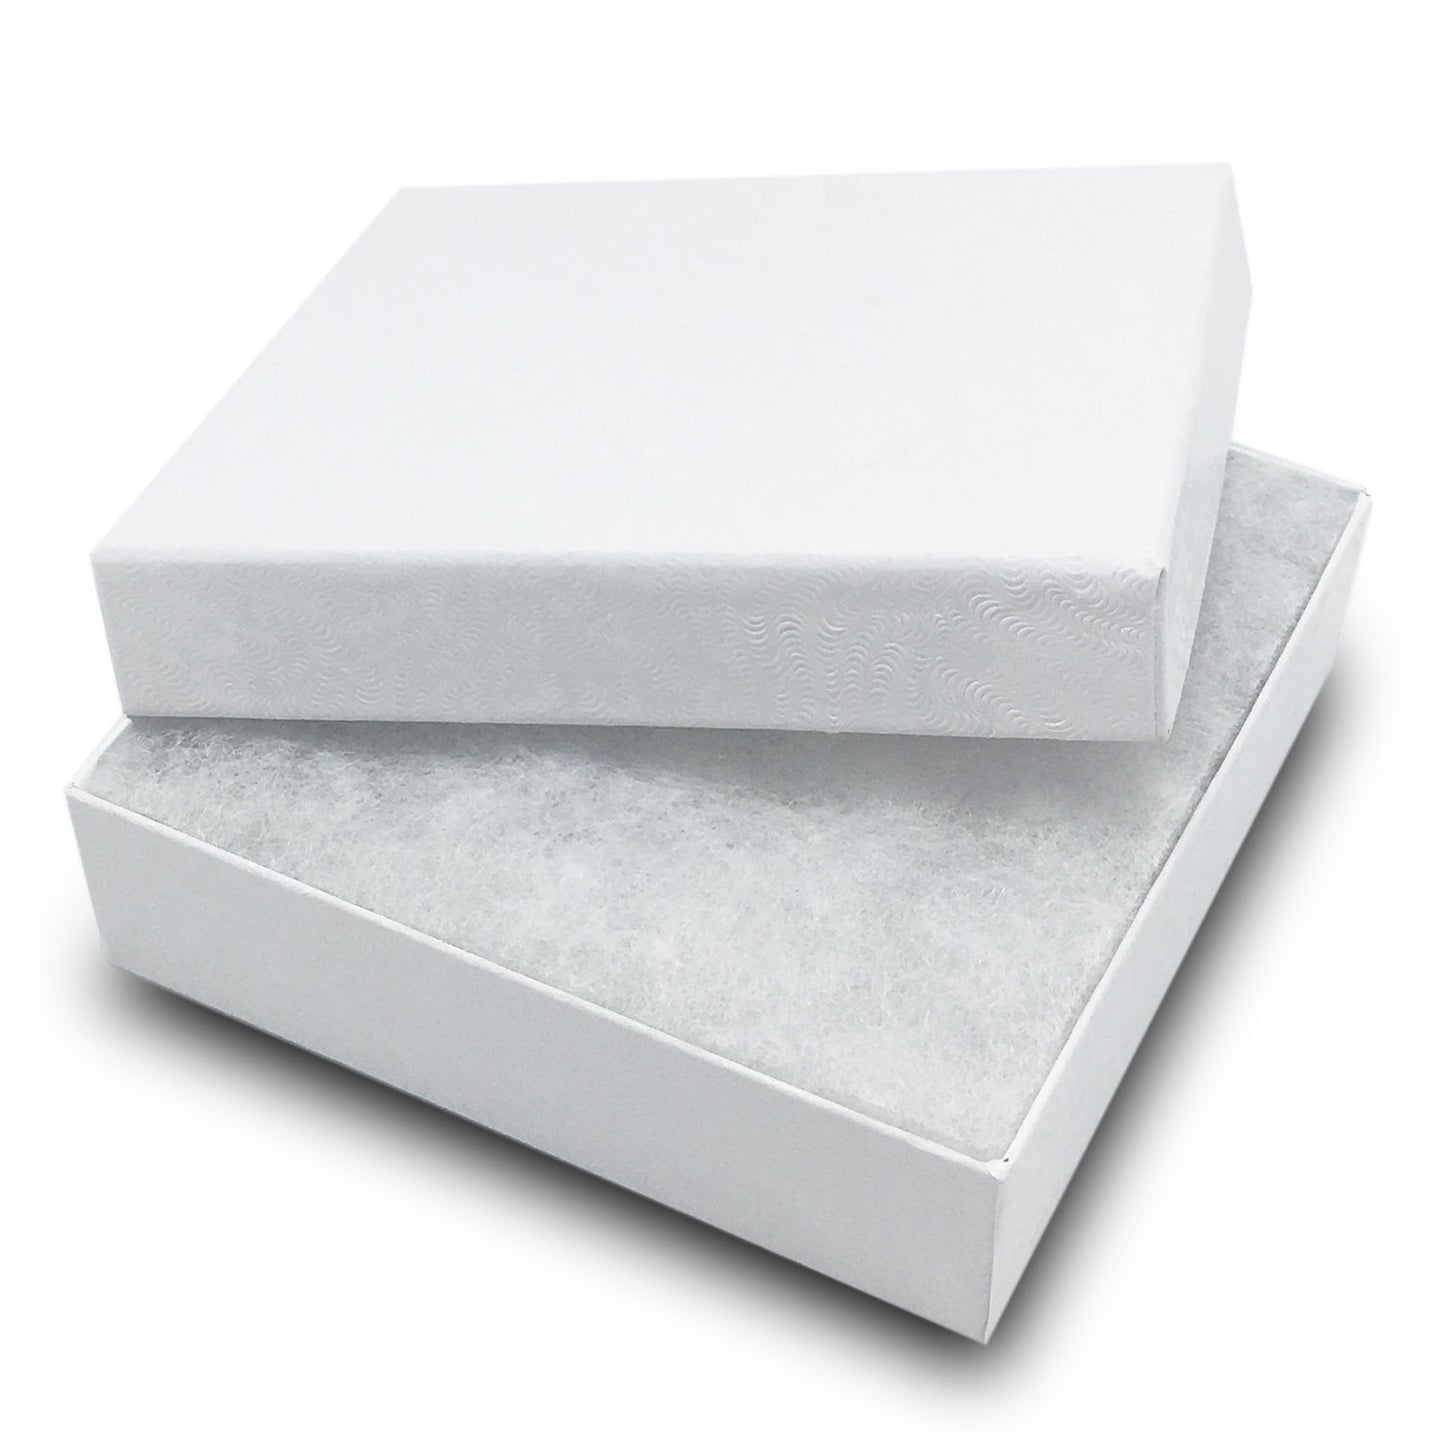 3 1/2" x 3 1/2" x 1" White Swirl Cotton Filled Paper Box